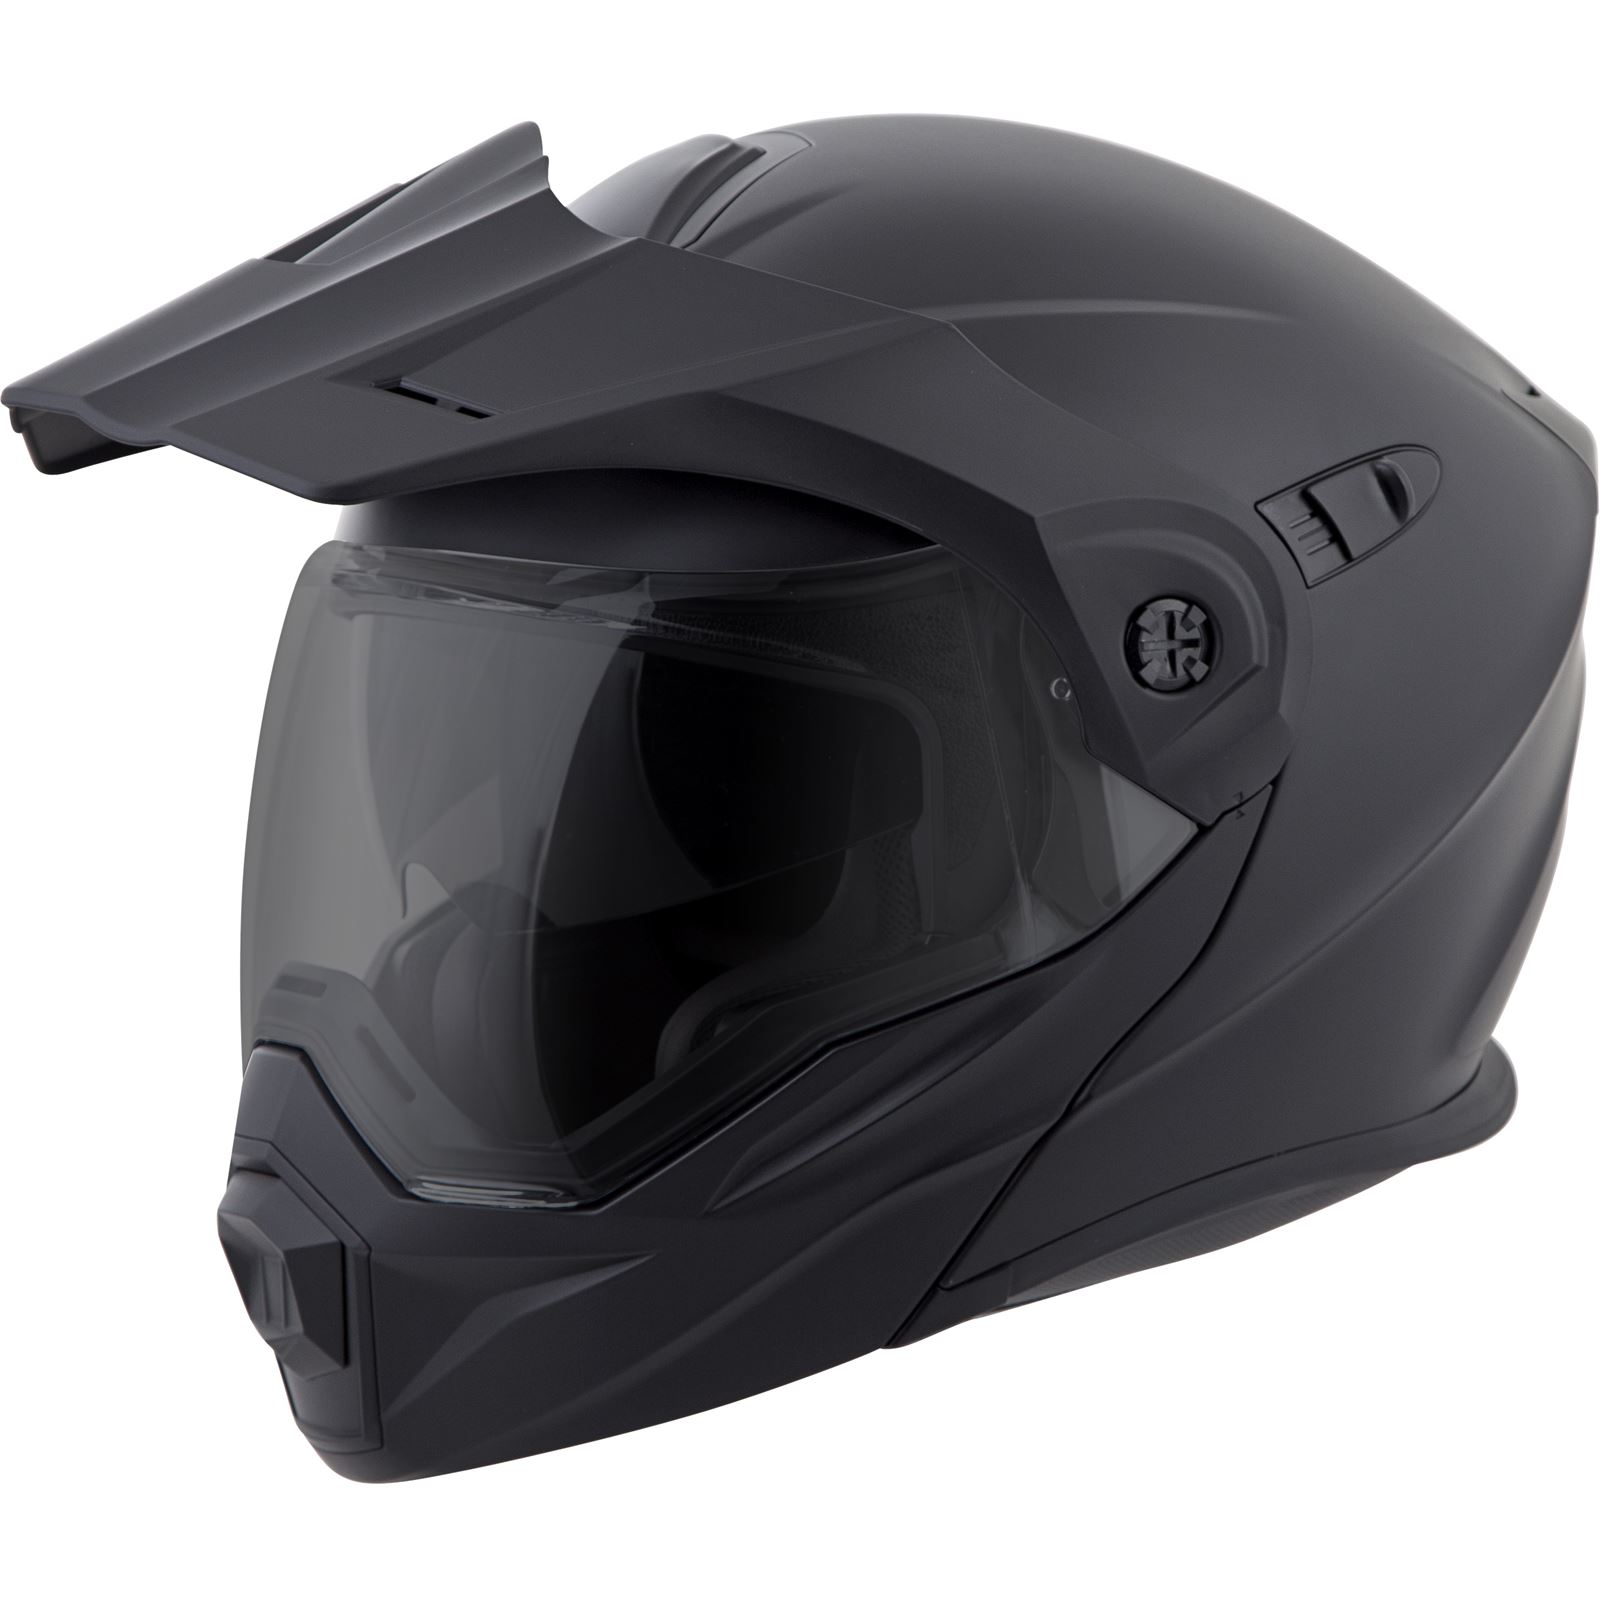 Scorpion EXO-AT950 Modular Solid Helmet